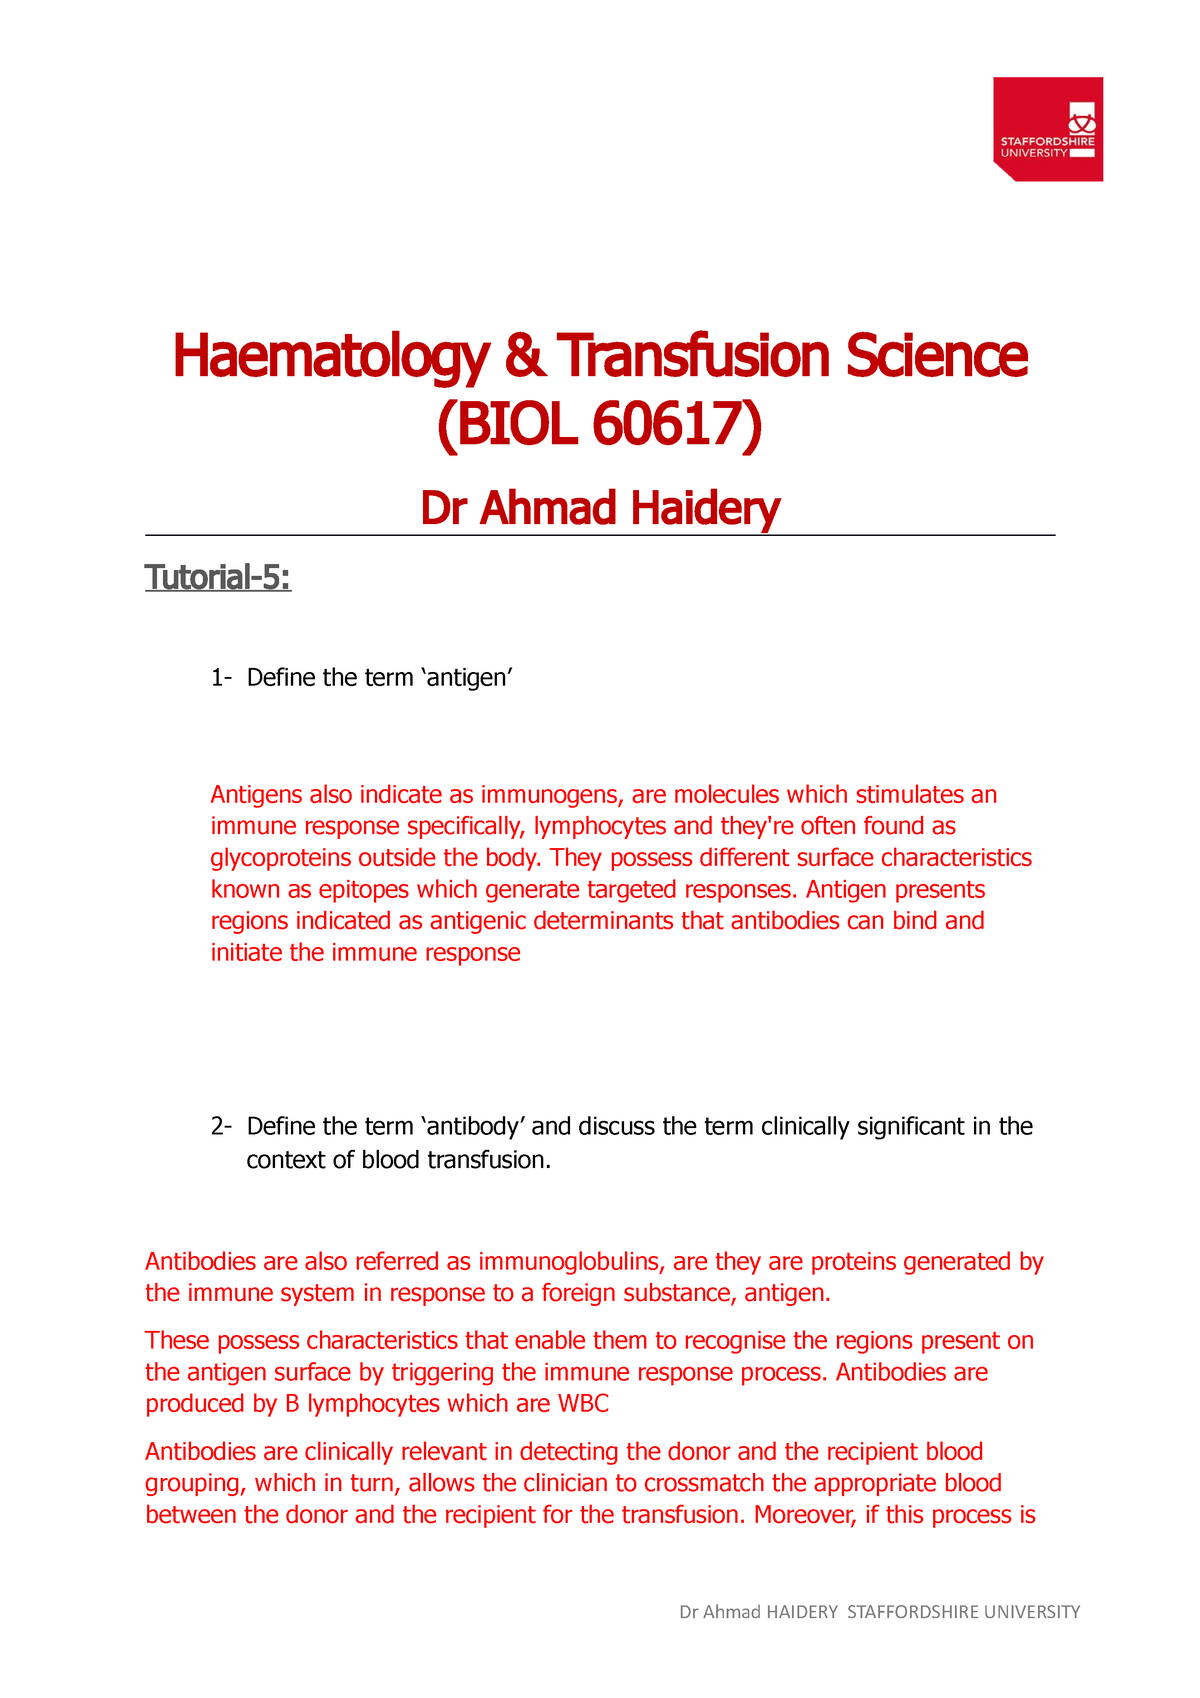 Tutorial 5 Haematology And Transfusion Science Biol 60617 Dr Ahmad Haidery Tutorial 5 1 3251